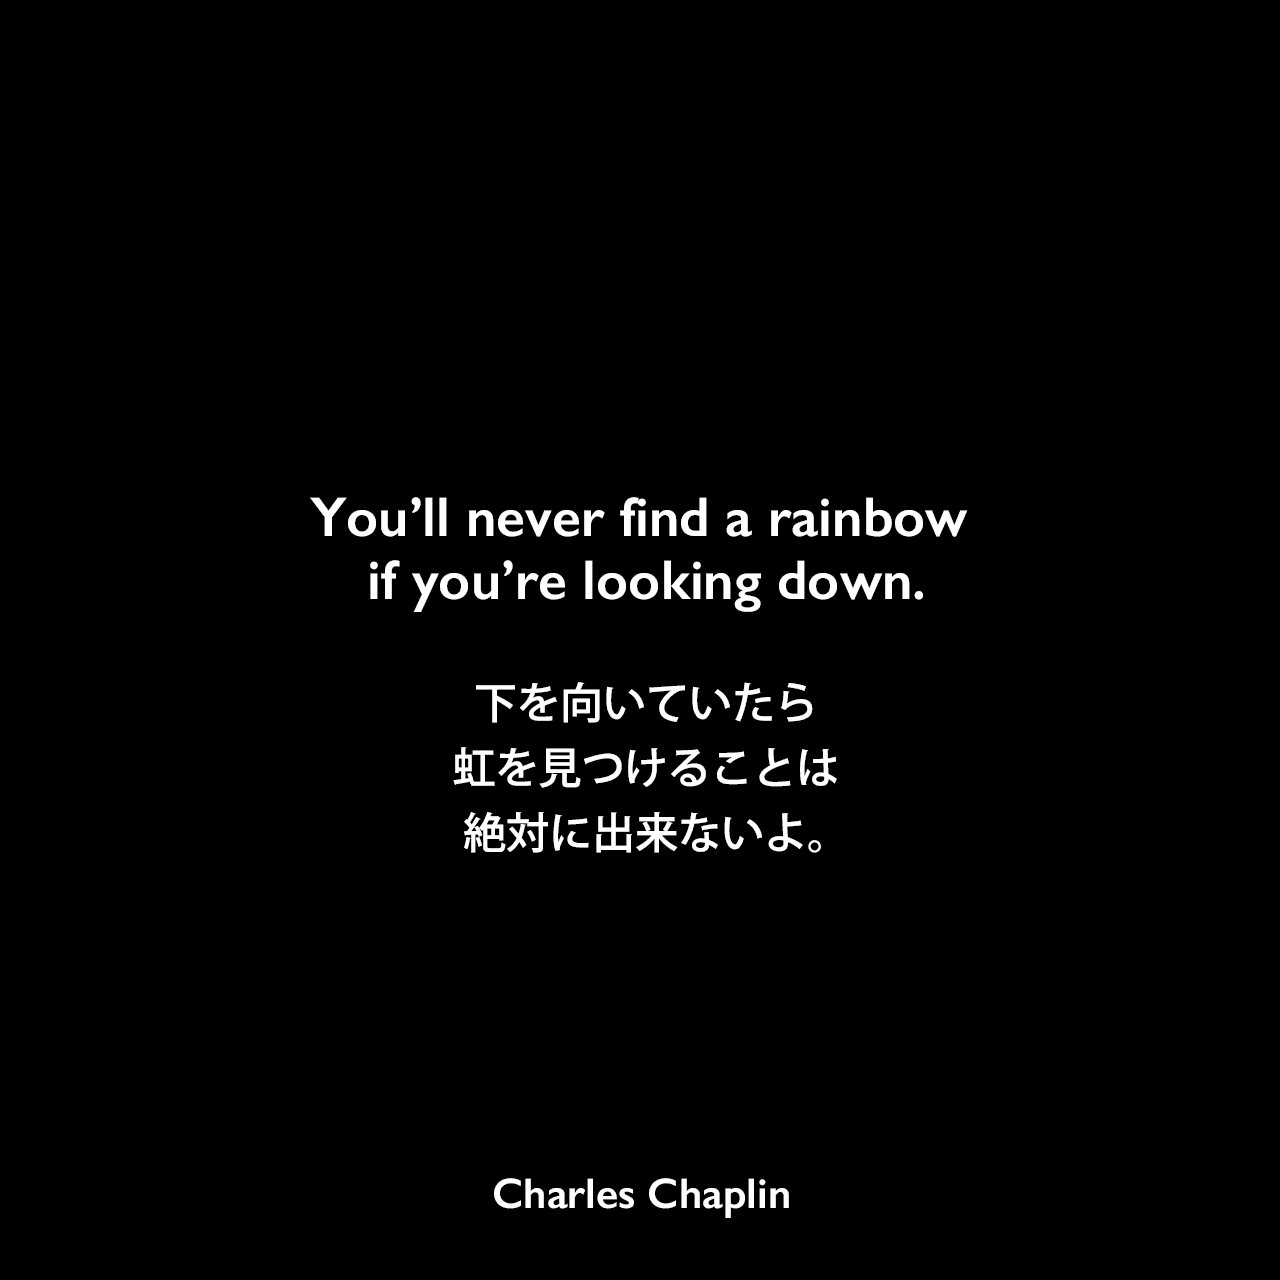 You’ll never find a rainbow if you’re looking down.下を向いていたら、虹を見つけることは絶対に出来ないよ。- 映画「サーカス」の主題歌「Swing High Little Girl」の歌詞よりCharles Chaplin